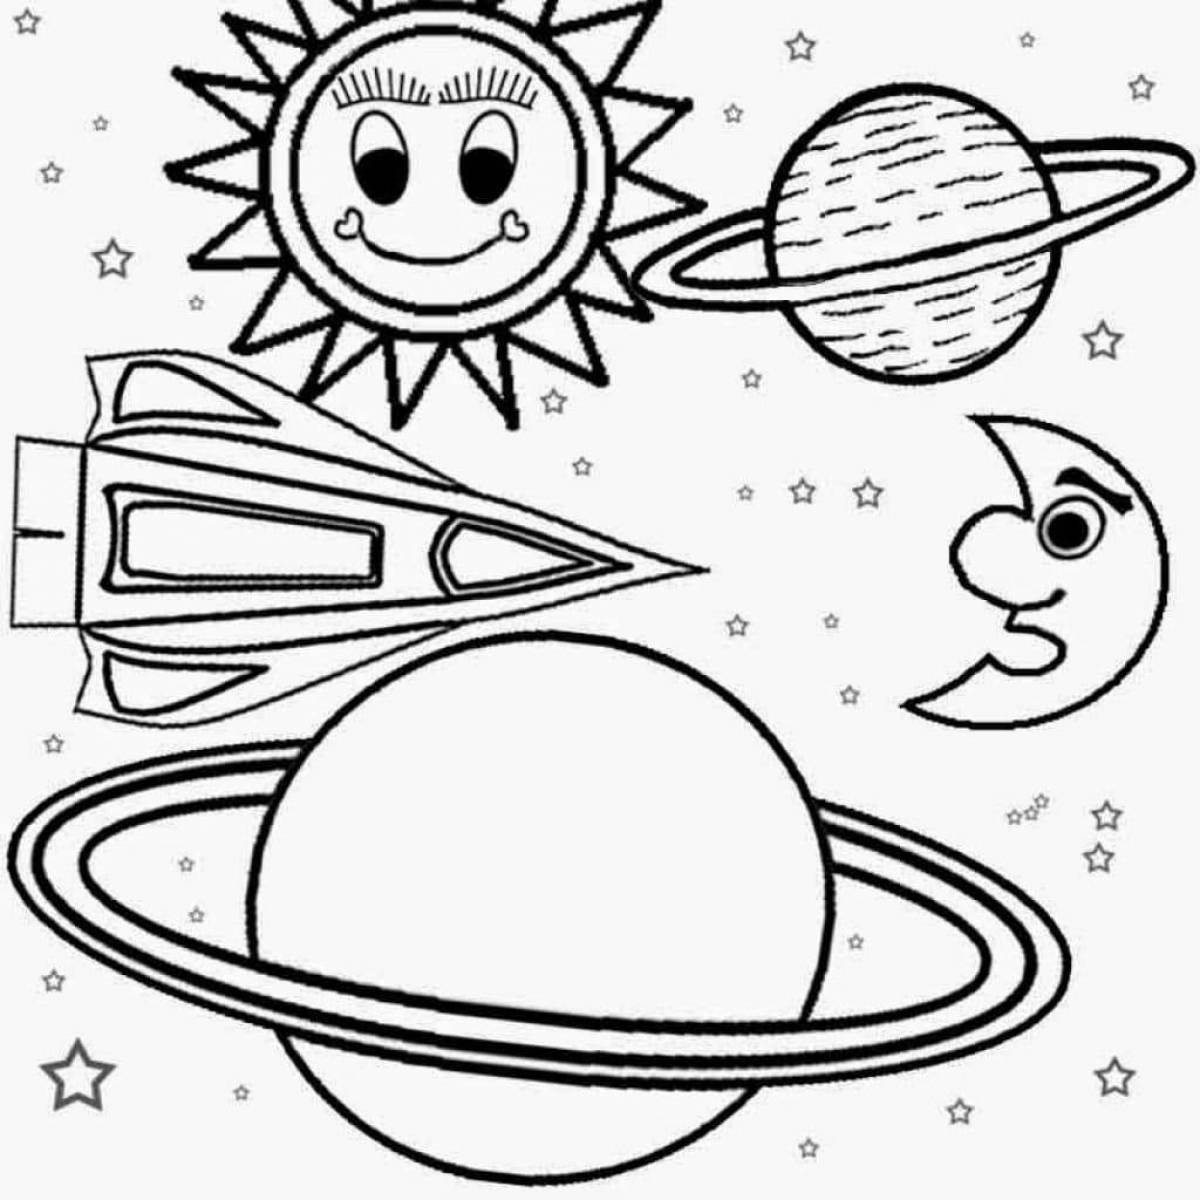 Coloring book joyful planet for kids